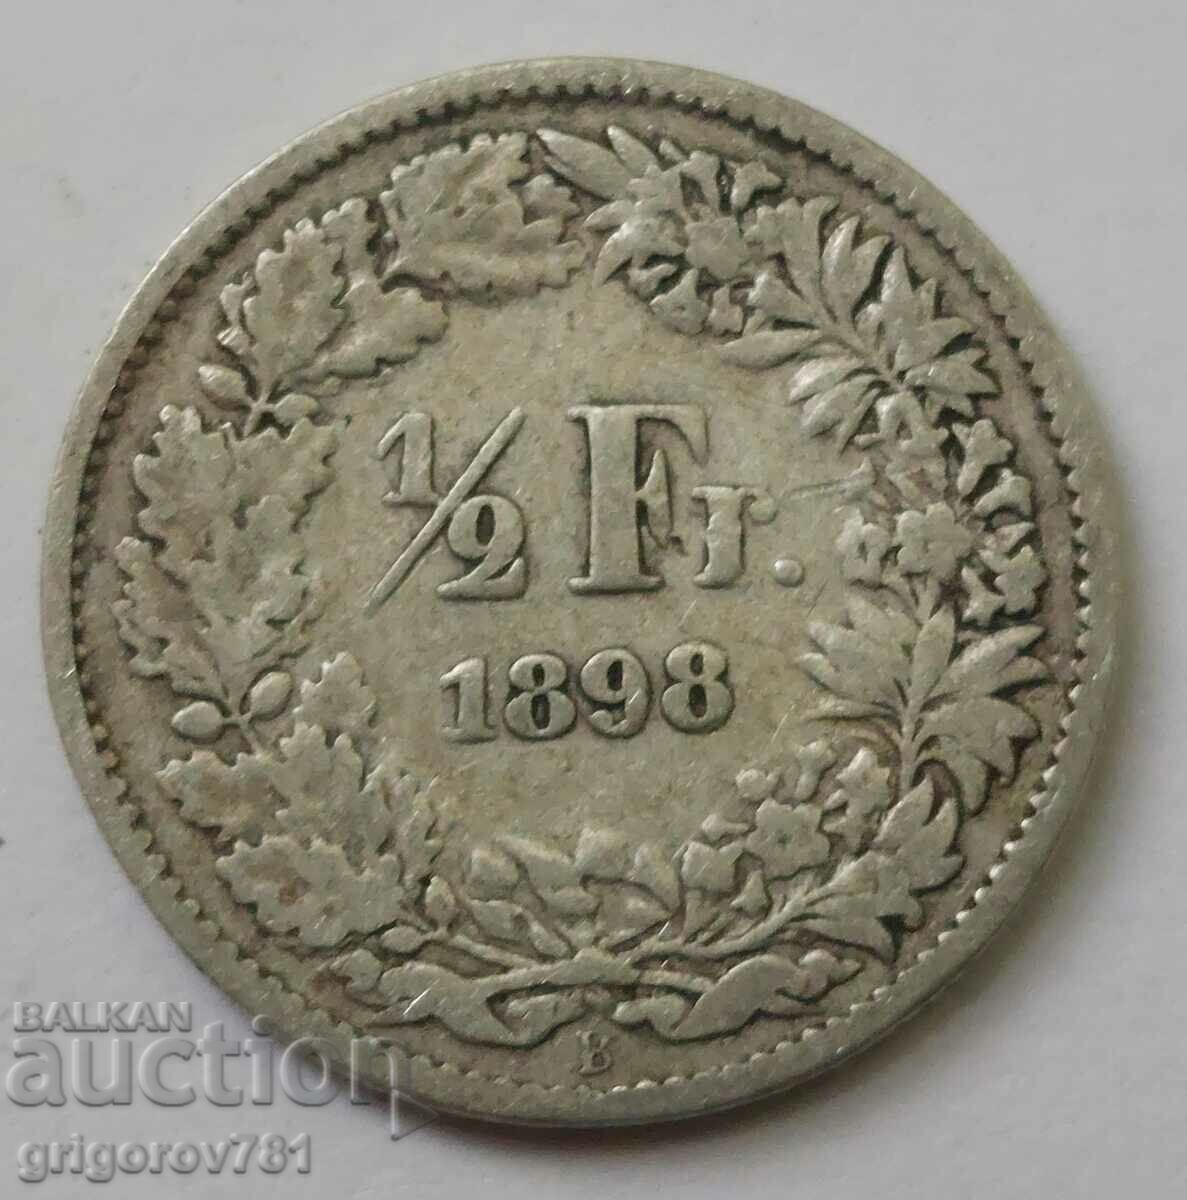 1/2 franc silver Switzerland 1898 B - silver coin